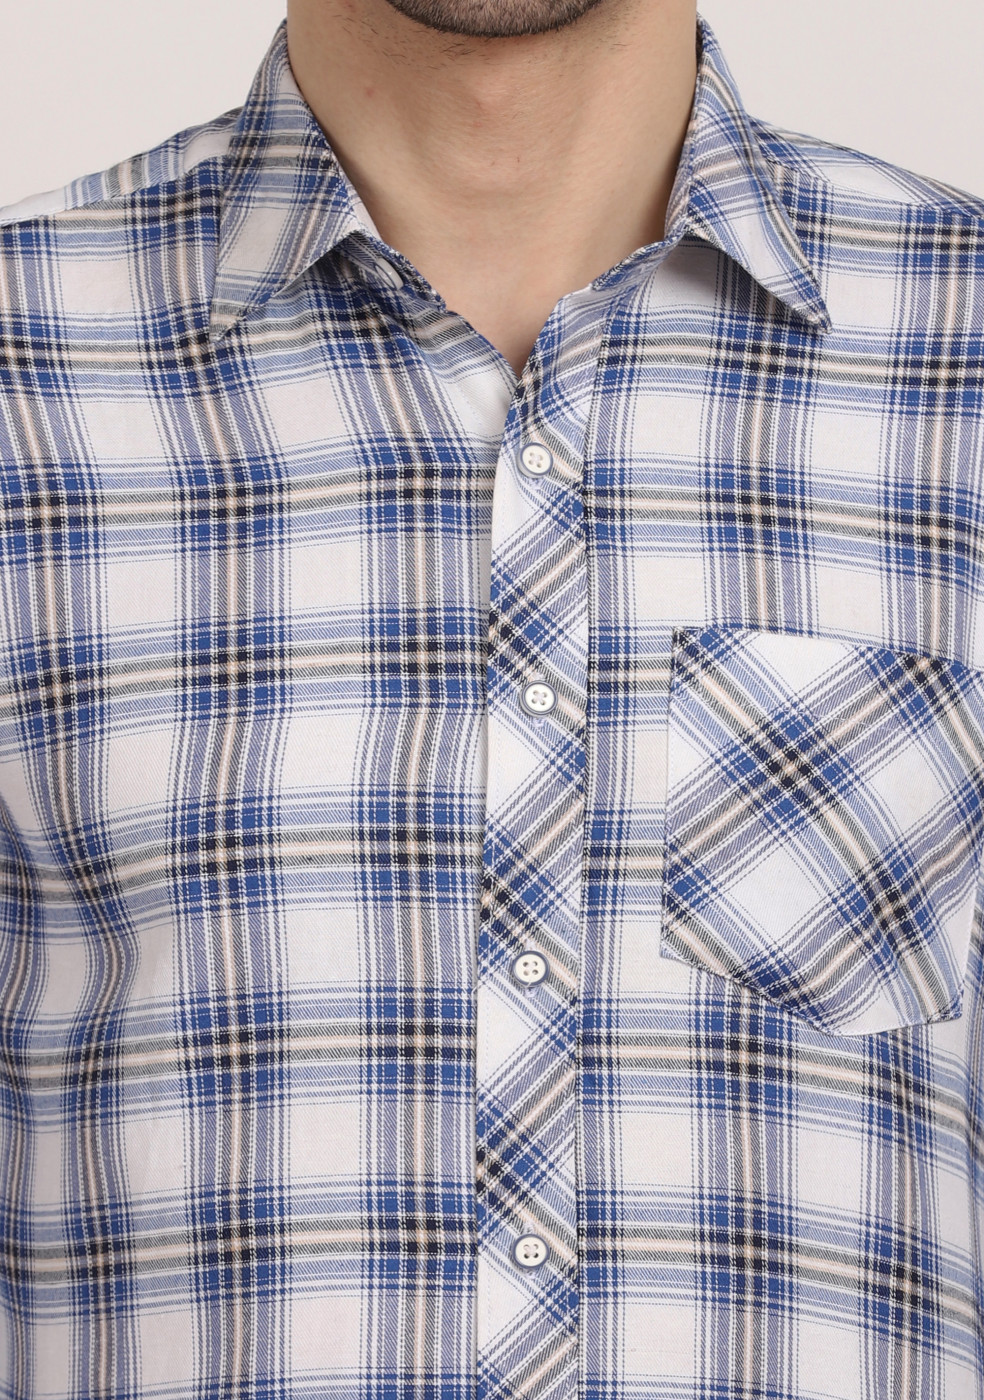 ASHTOM White Blue Big Mix Check Regular Fit Cotton Shirt For Men